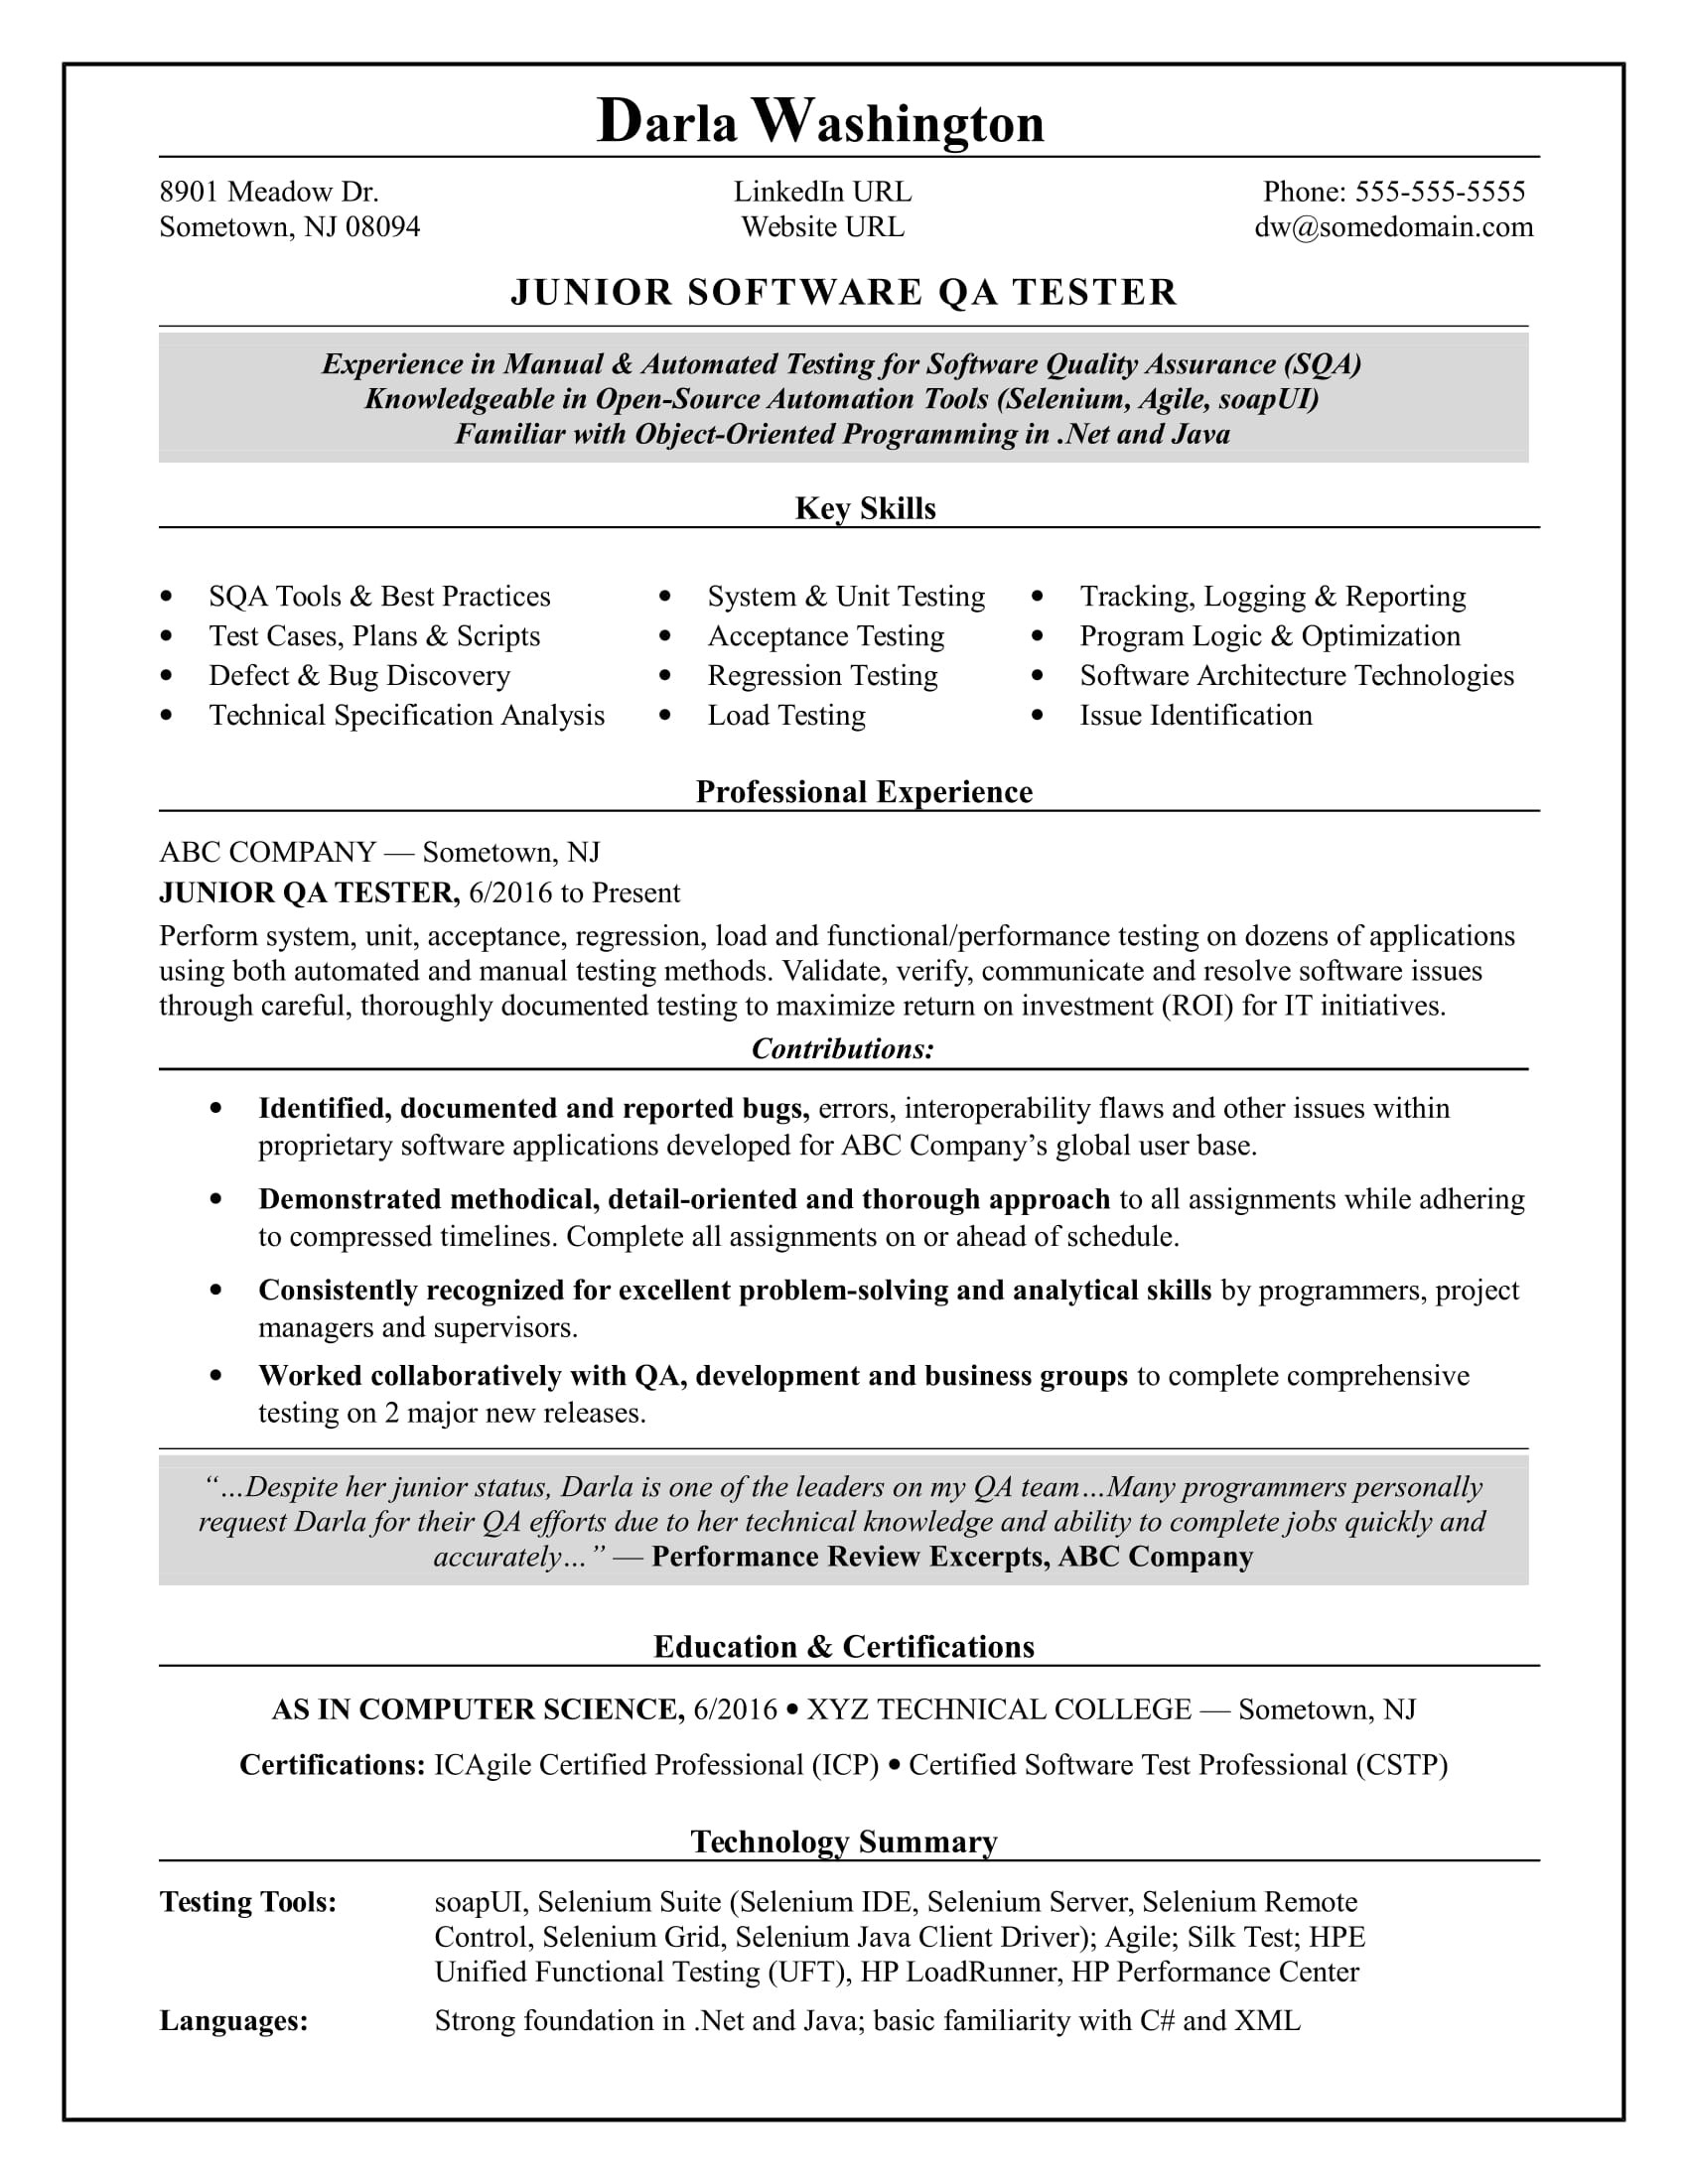 Sample Resume for Entry Quality assurance Entry-level software Tester Resume Monster.com